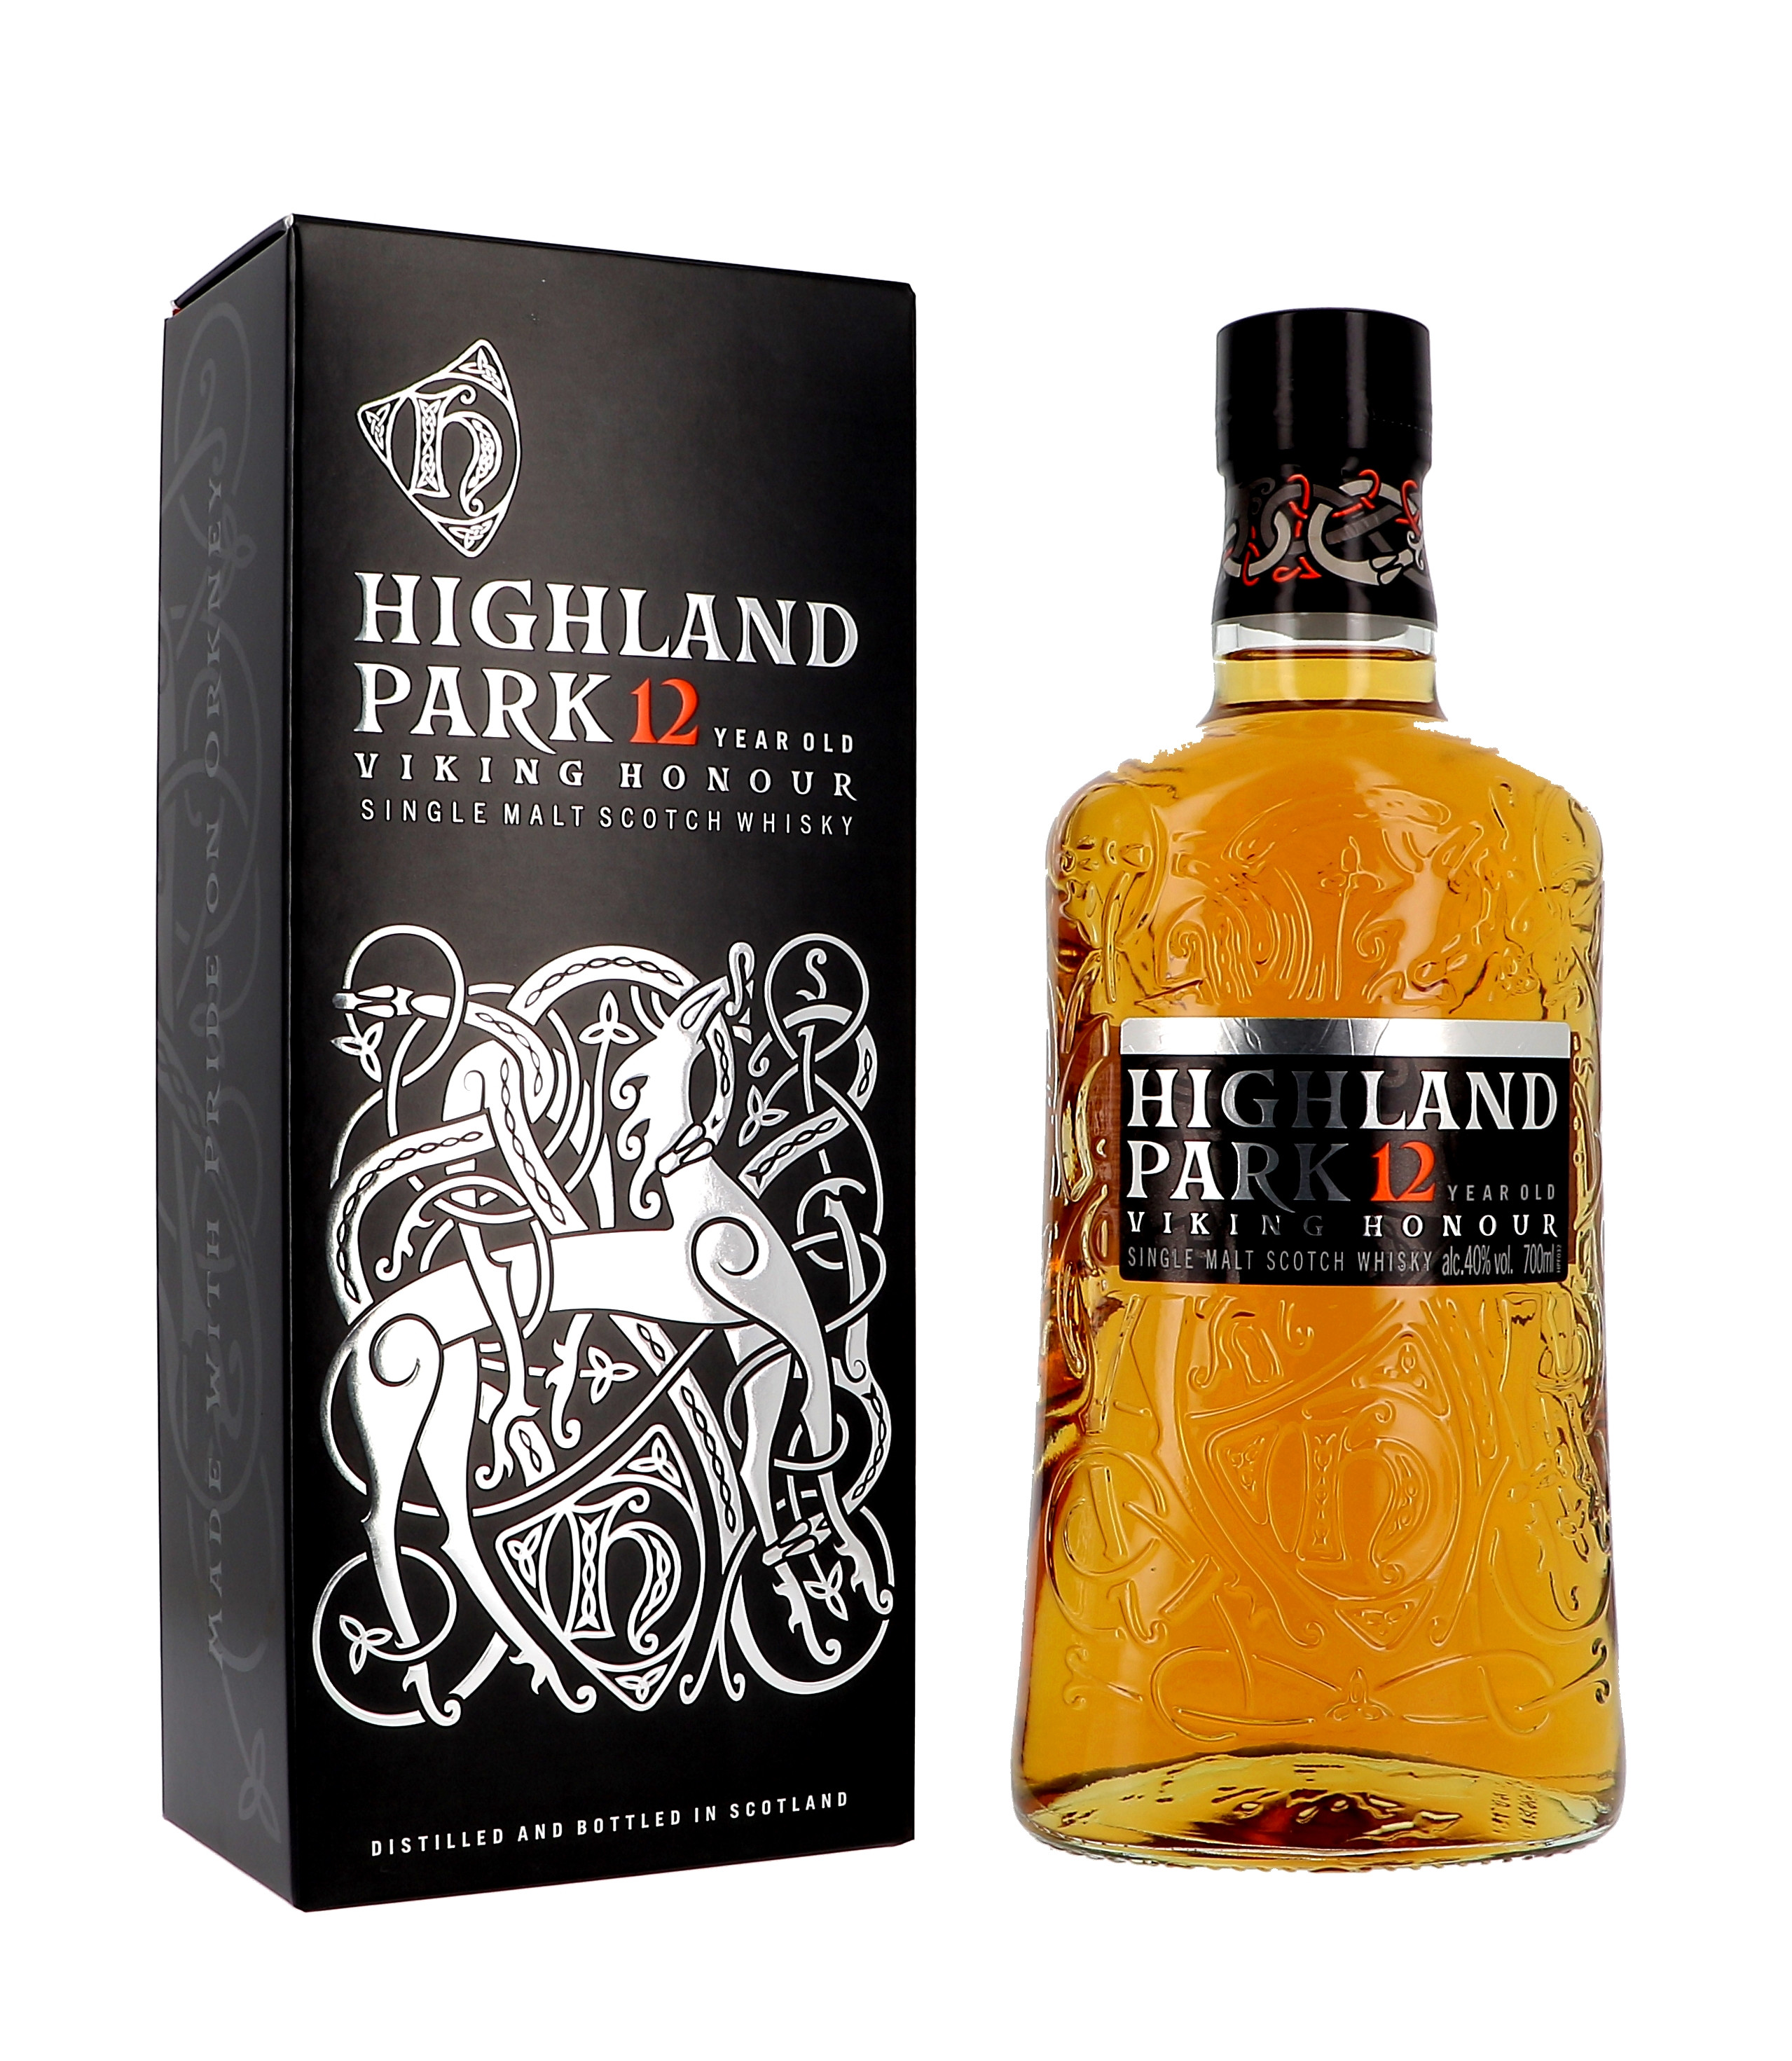 Highland Park 12 Years Old Viking Honour 70cl 40% Orkney Islands Single Malt Scotch Whisky (Whisky)